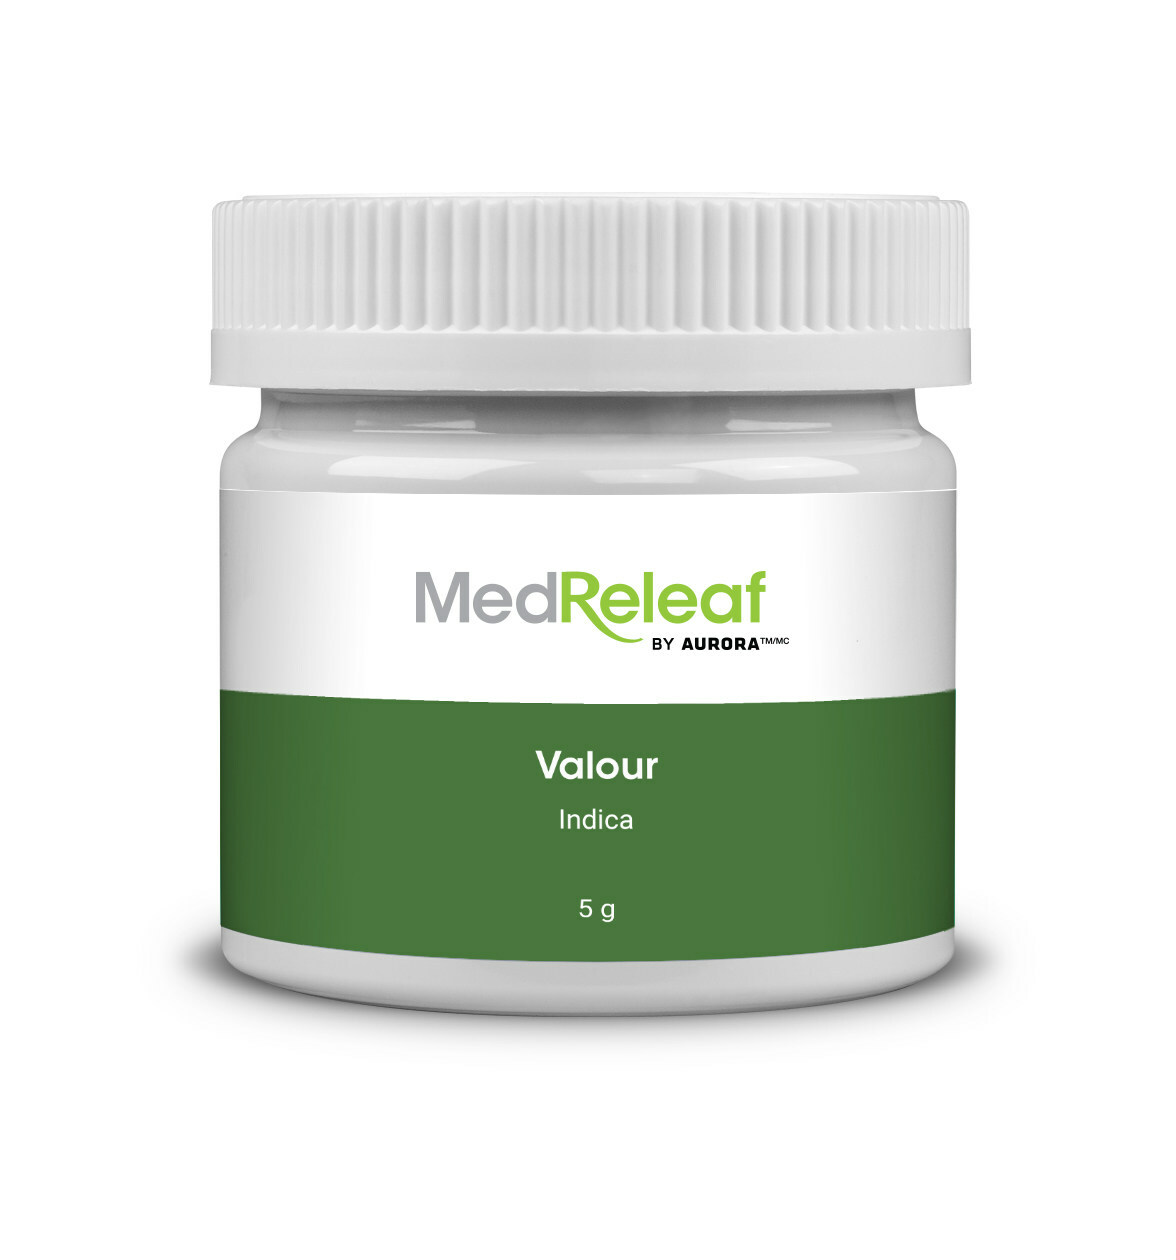 MedReleaf Valour Flower Packaging (CNW Group/Aurora Cannabis Inc.)